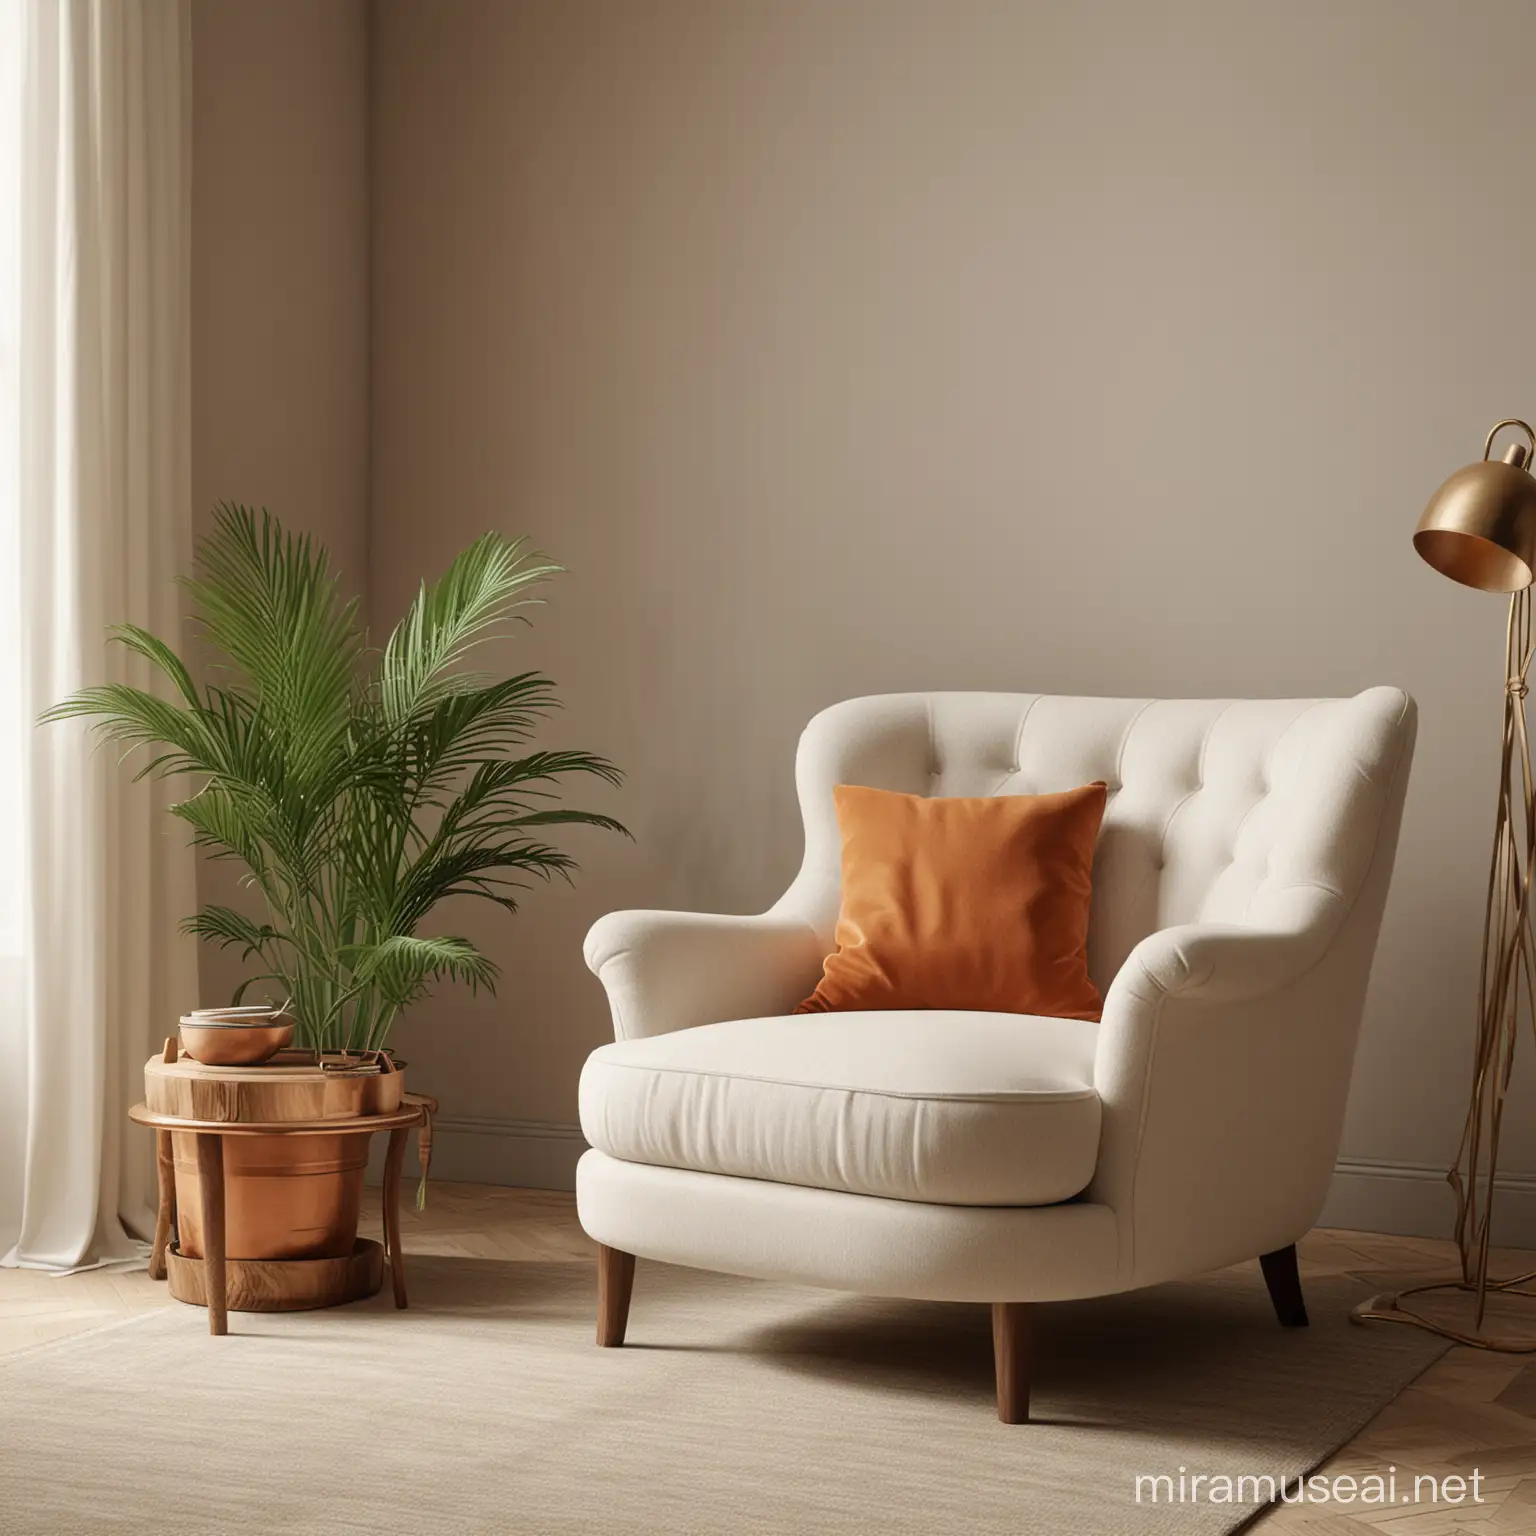 Organic Armchair Designs Visual Art for Home Decor